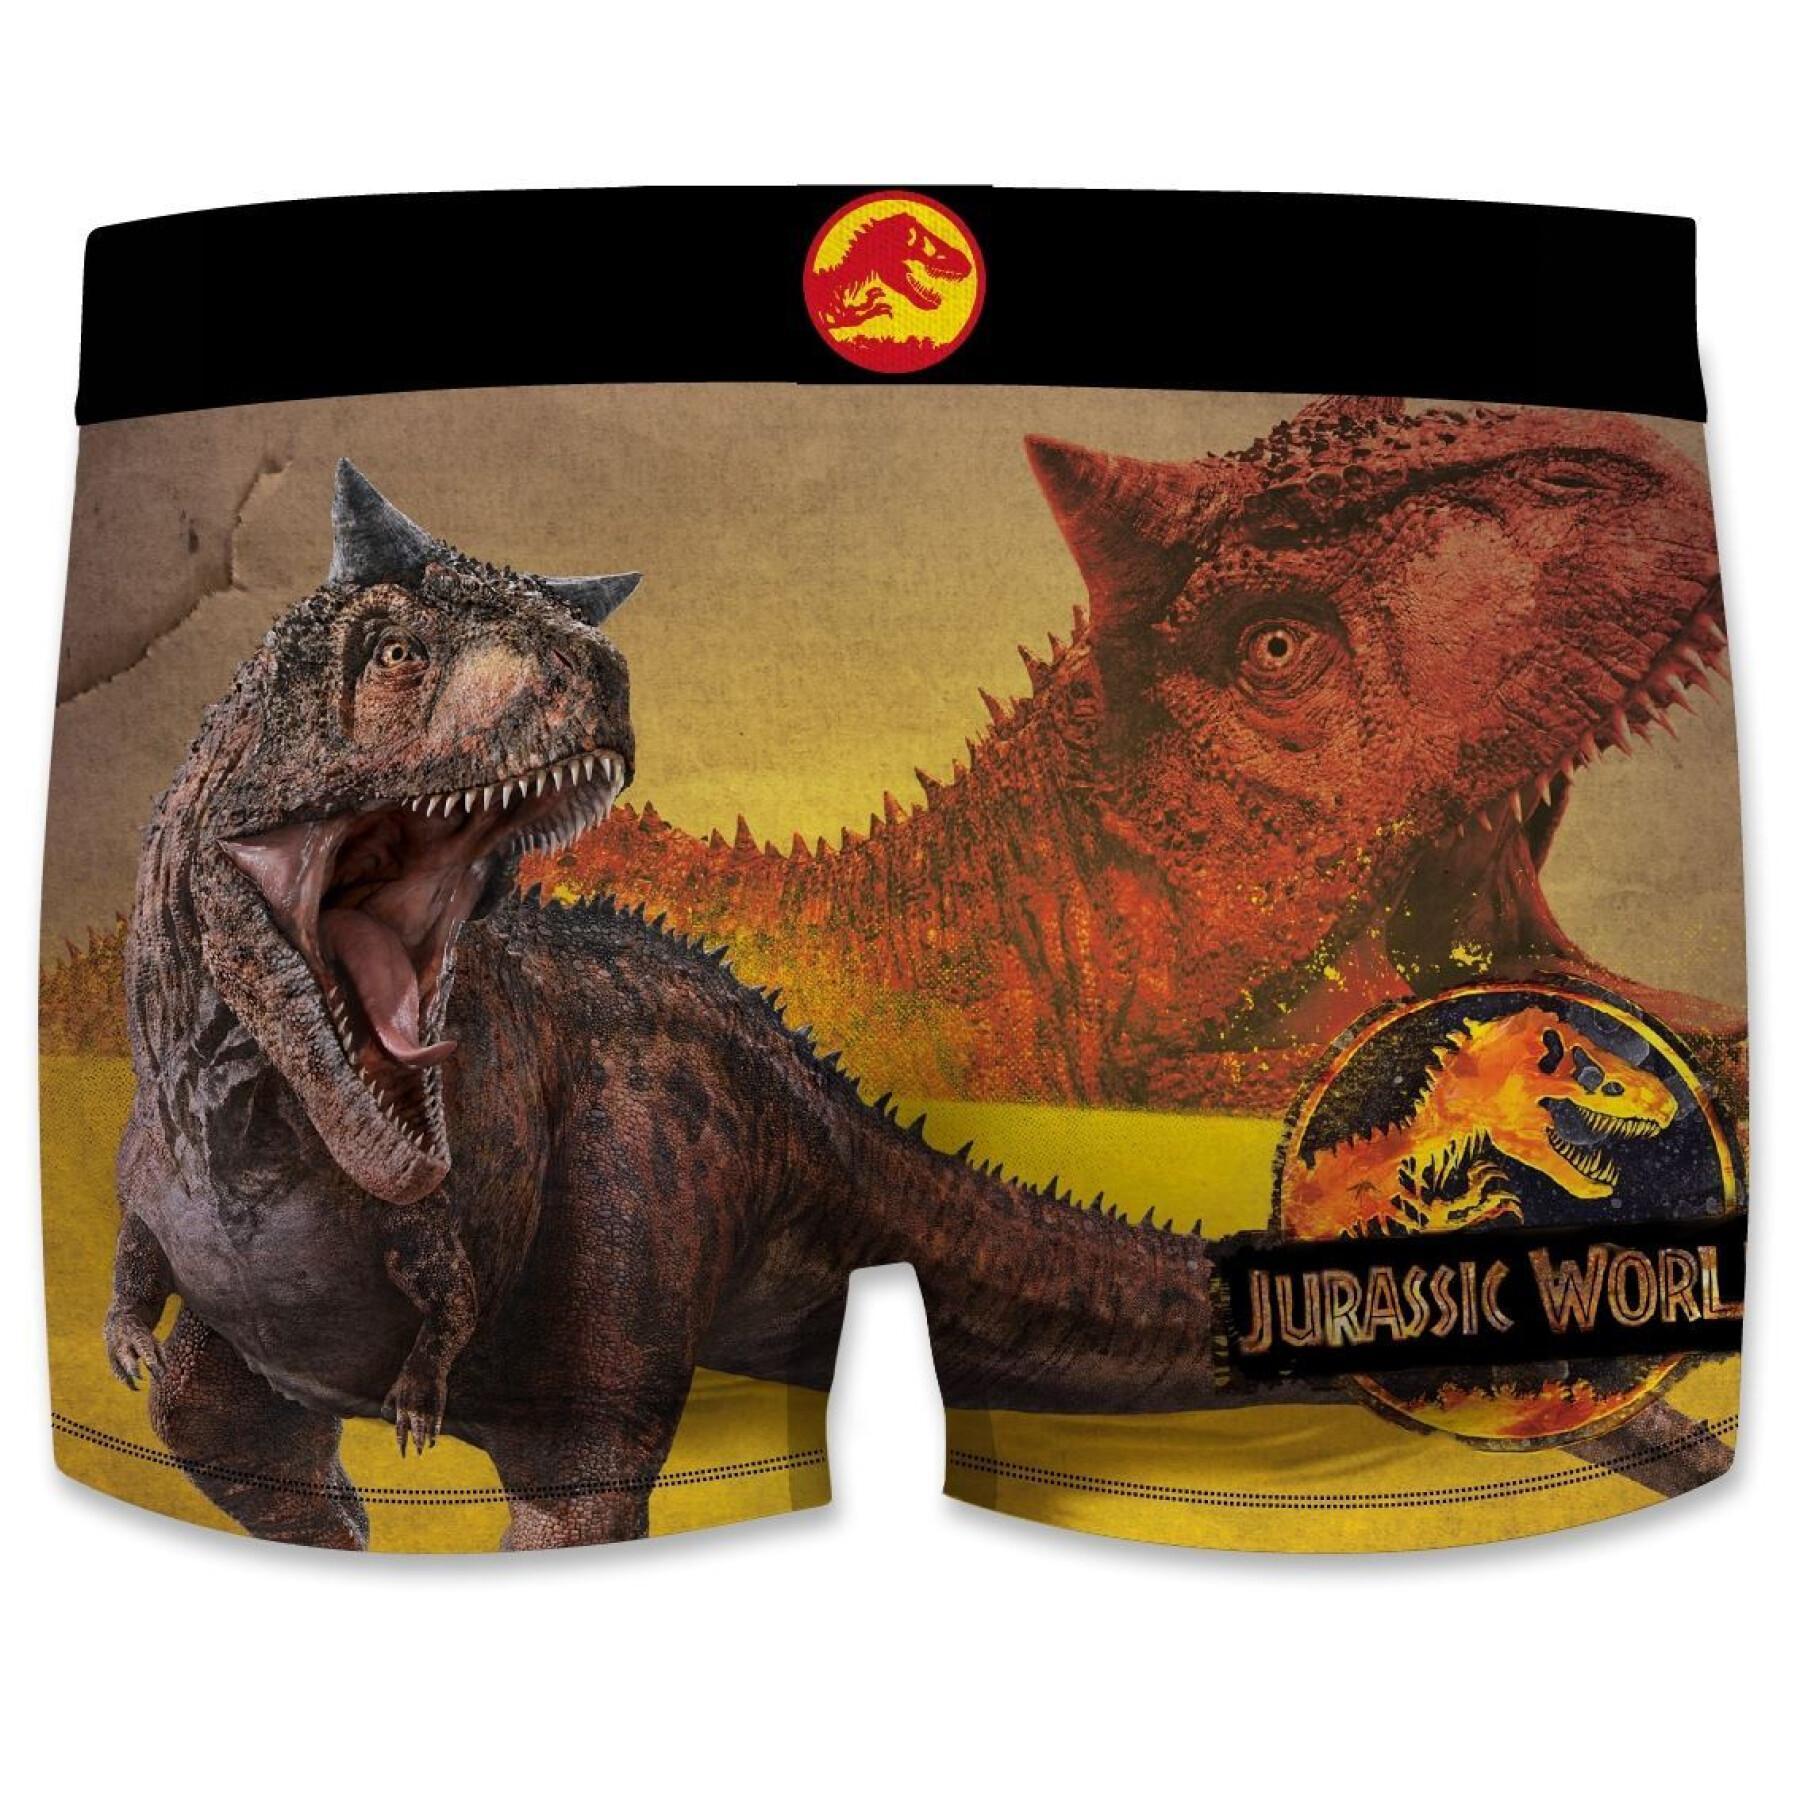 Calzoncillos para niños Freegun Jurassic World (x2)